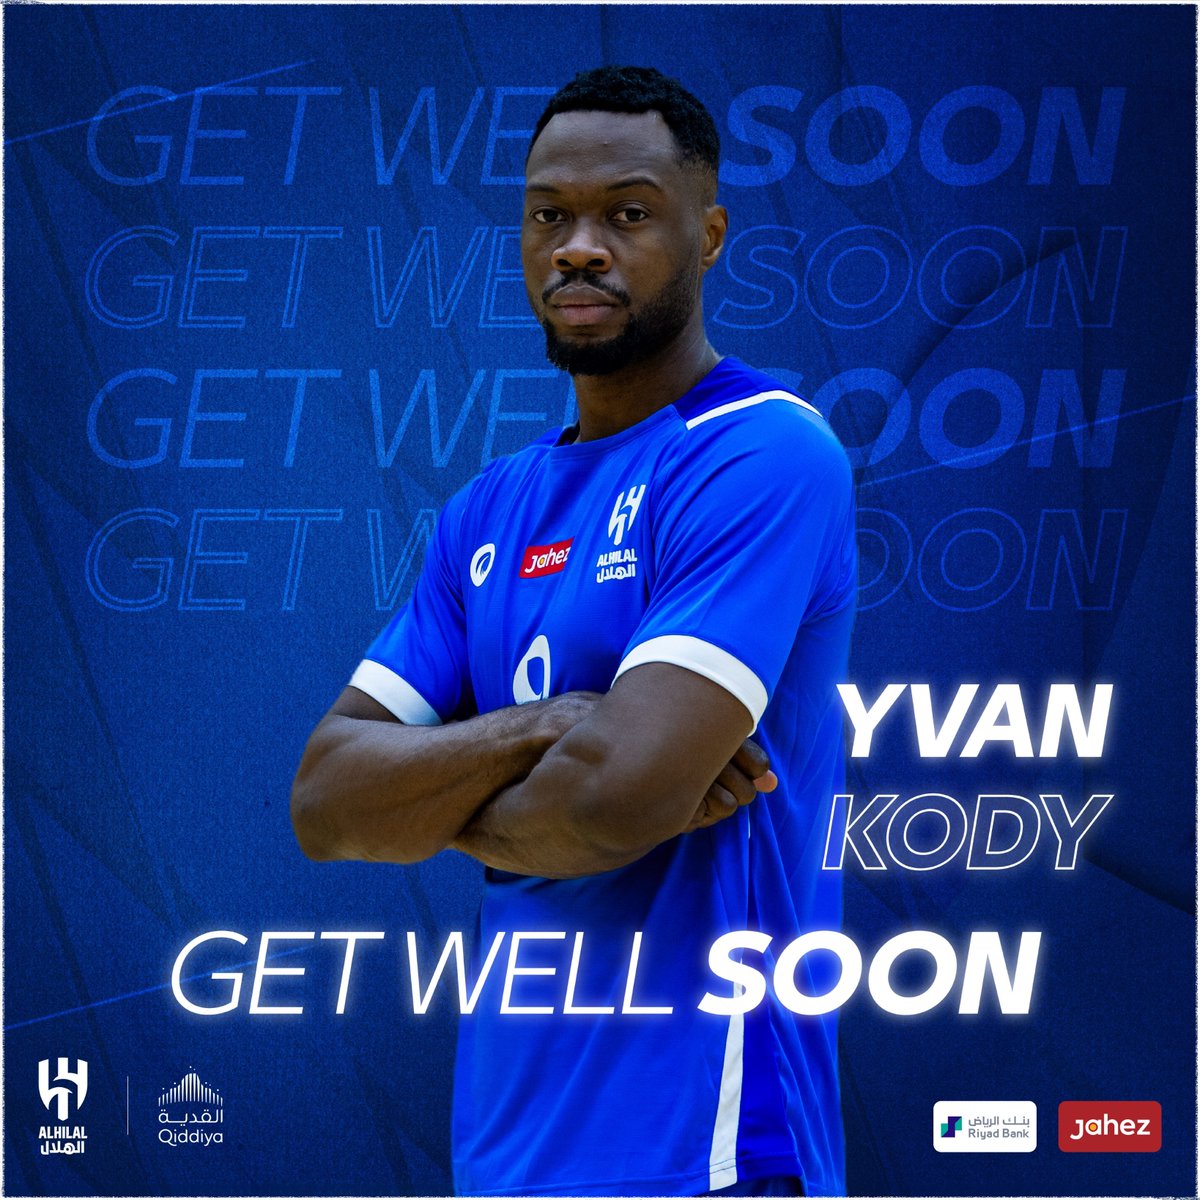 GET WELL SOON 🙏🏻
YVAN KODY 💙

Wishing you a speedy recovery 🏐
#AlHilal